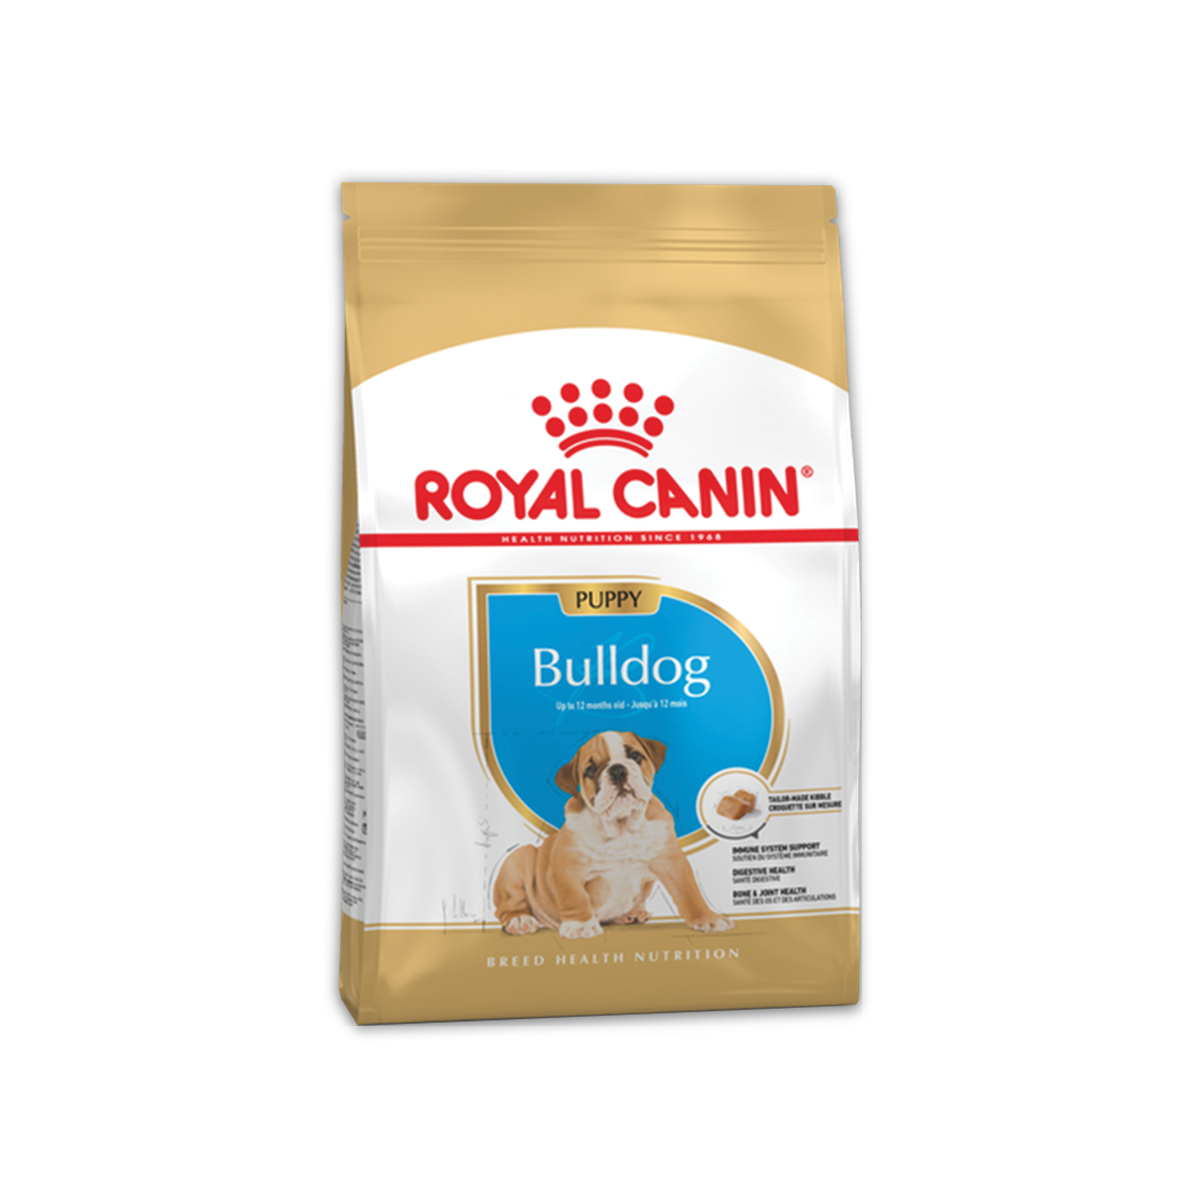 Royal Canin Bulldog Puppy โรยัล คานิน อาหารสำหรับลูกสุนัขพันธุ์ บูลด็อก อายุ 2 - 12 เดือน